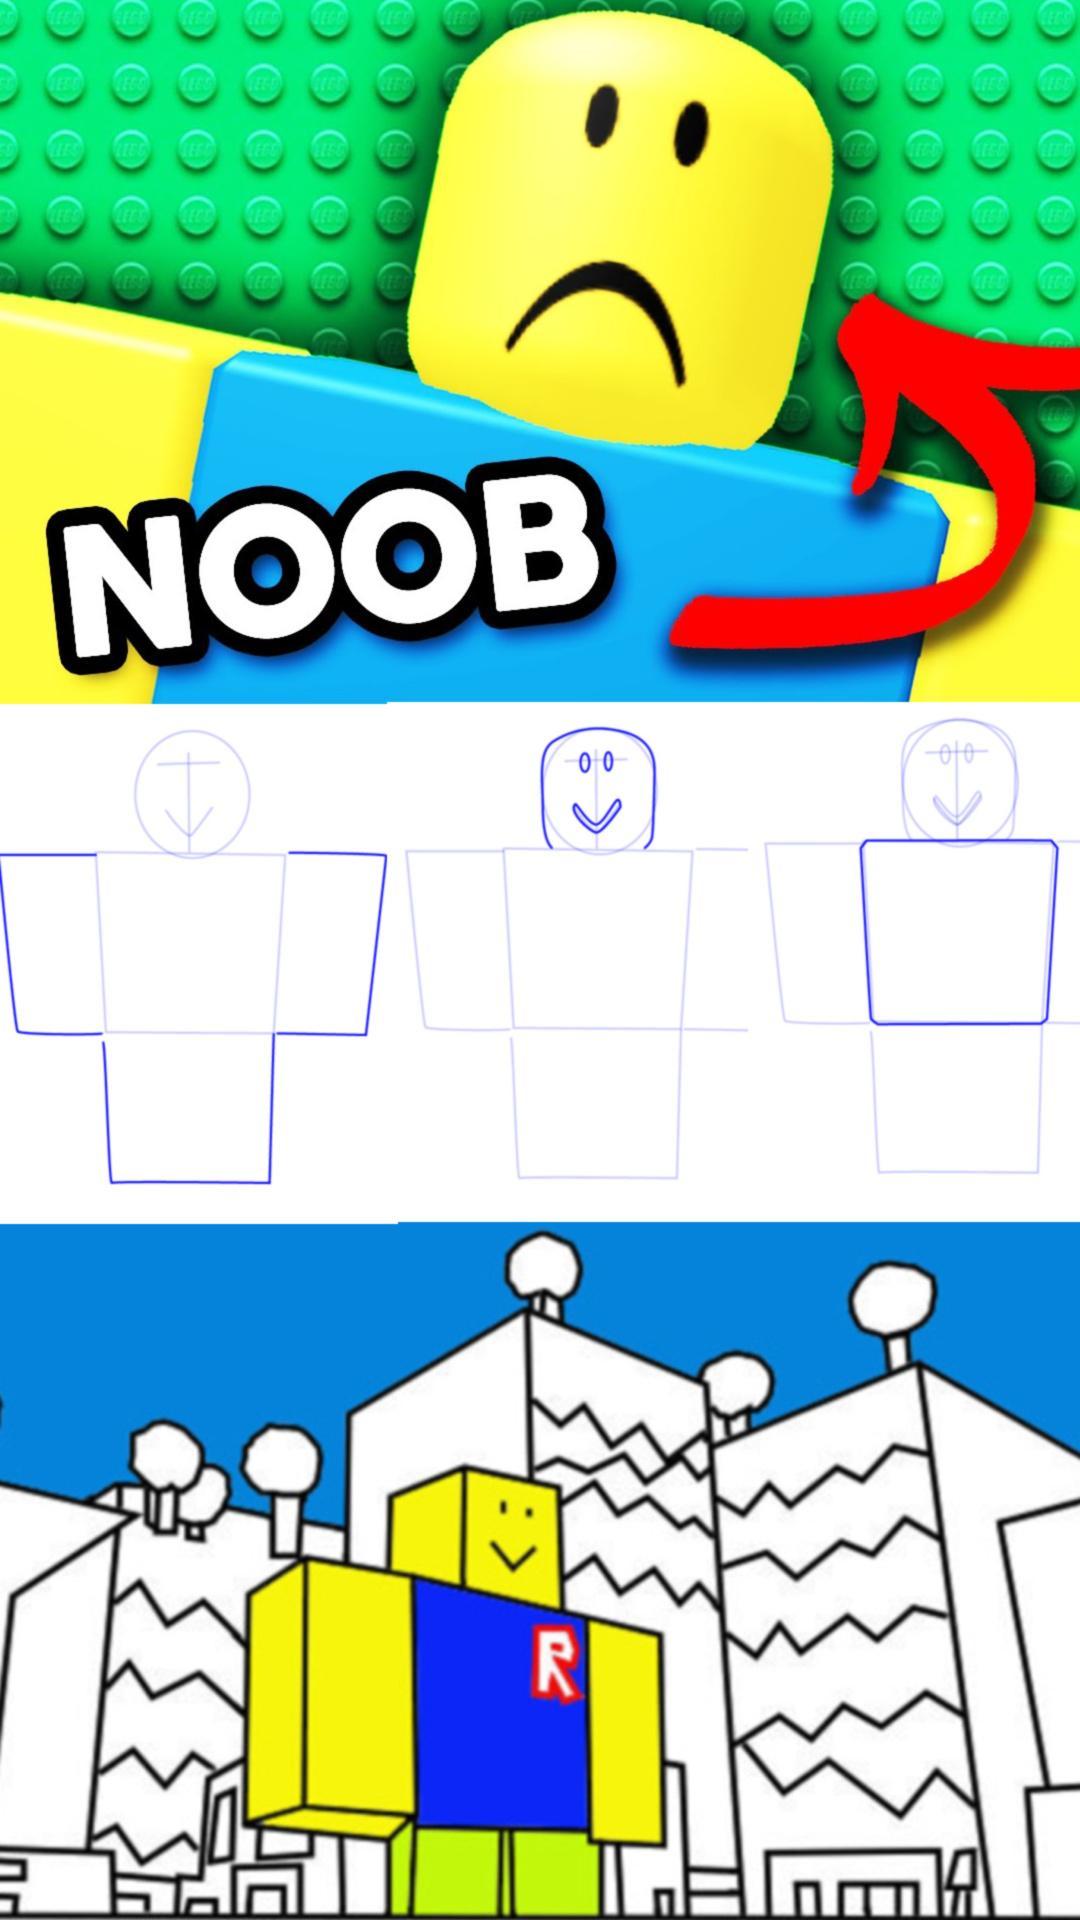 Como Dibujar Roblox For Android Apk Download - imagenes de personajes de roblox para dibujar